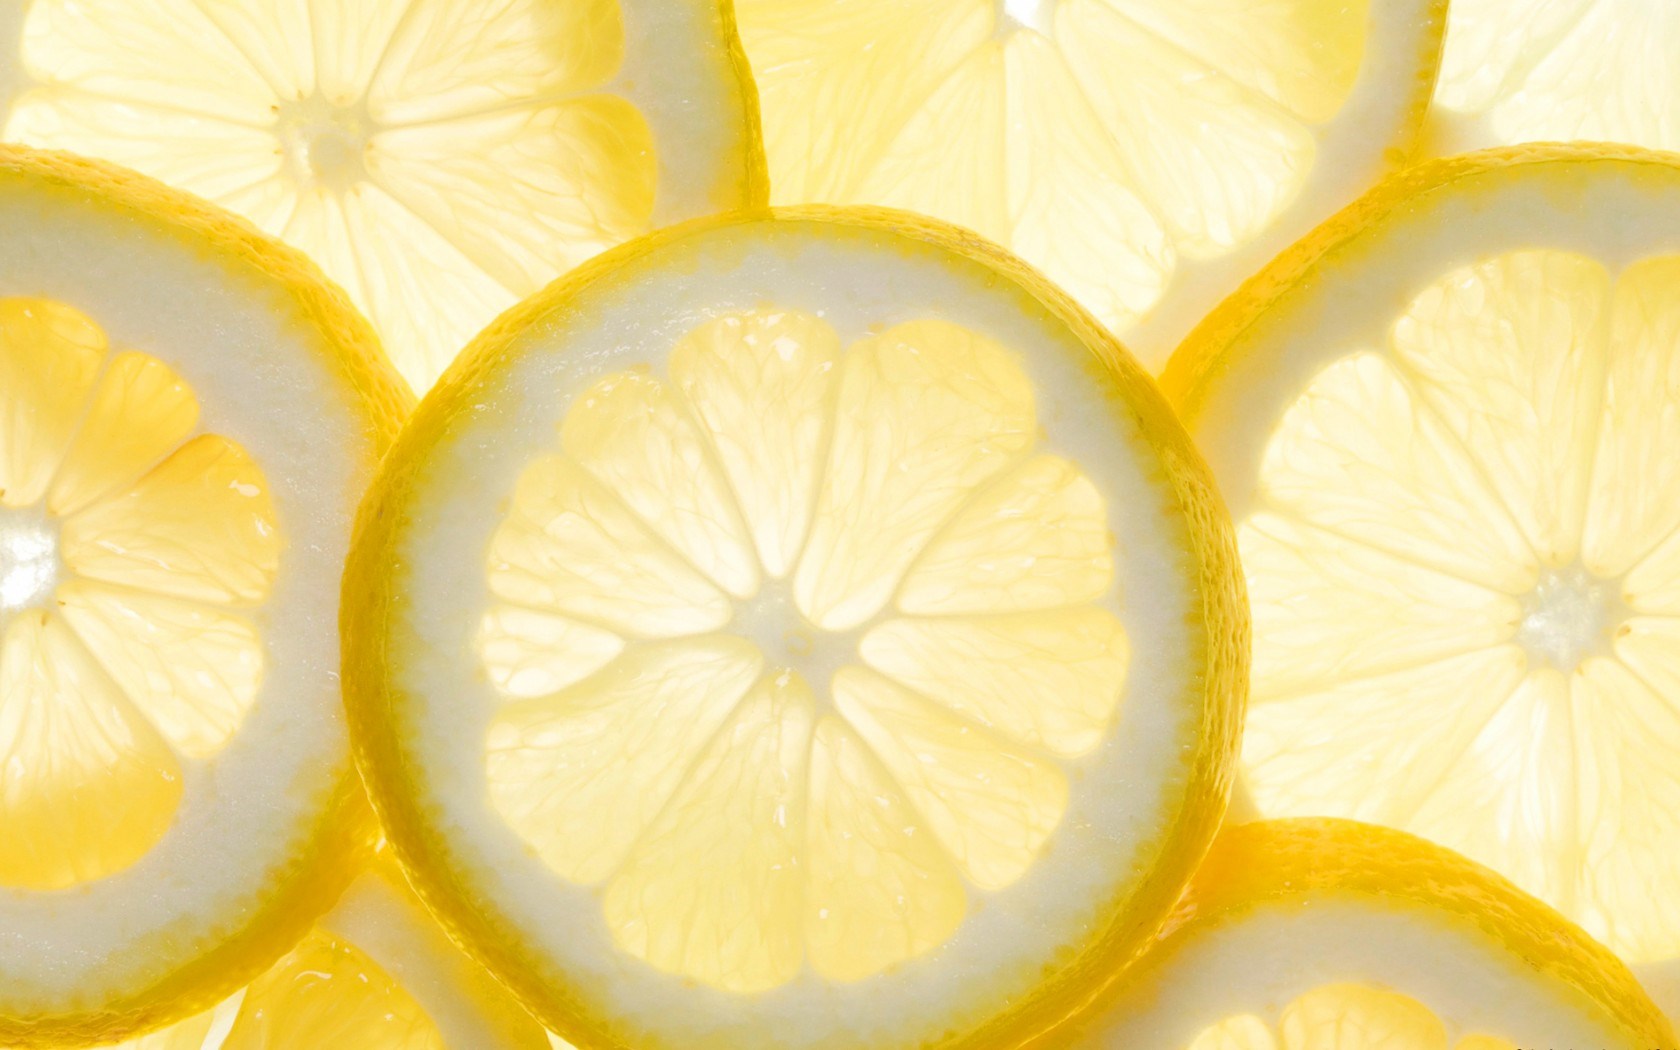 Texture Background With Citrus Fruit Of Lemon Slices